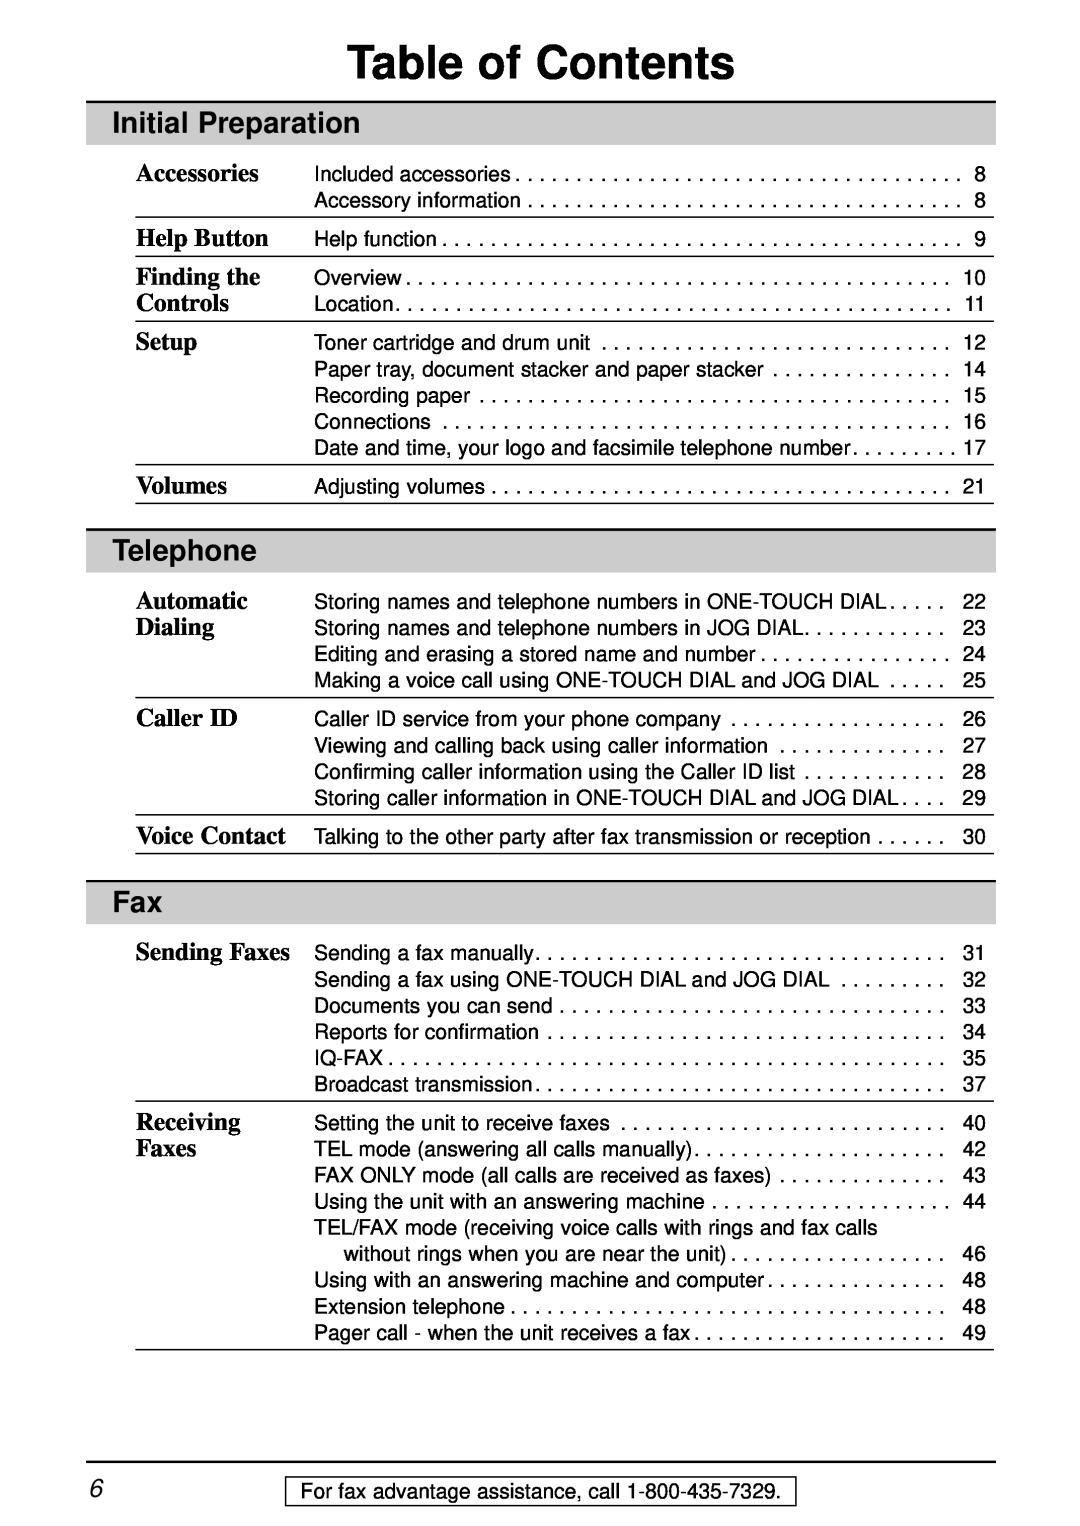 Panasonic KX-FL501 manual Initial Preparation, Telephone, Table of Contents 